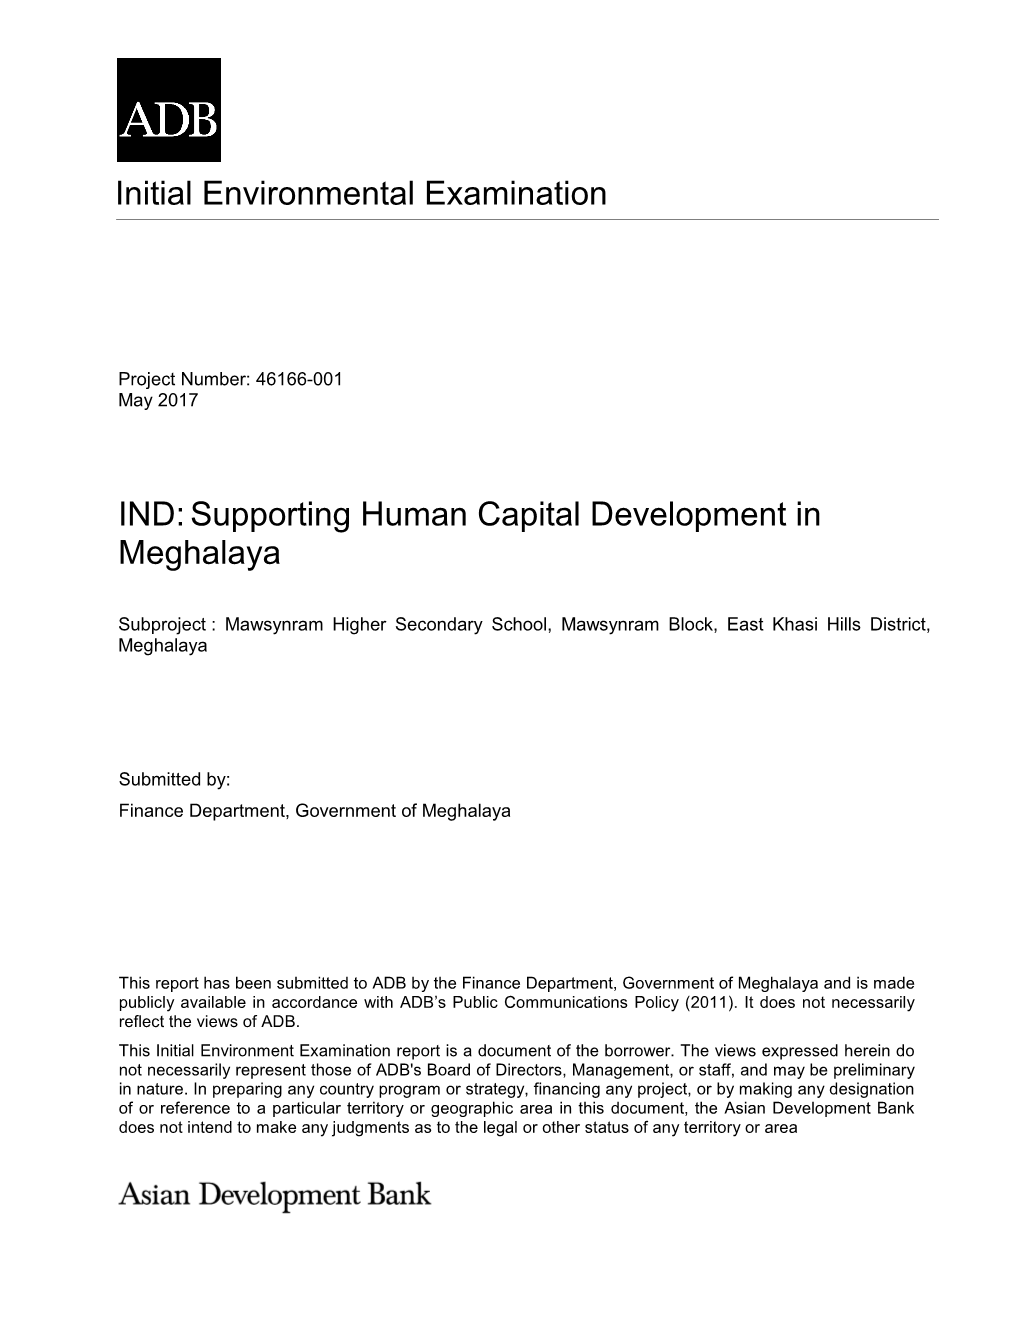 Initial Environmental Examination IND:Supporting Human Capital